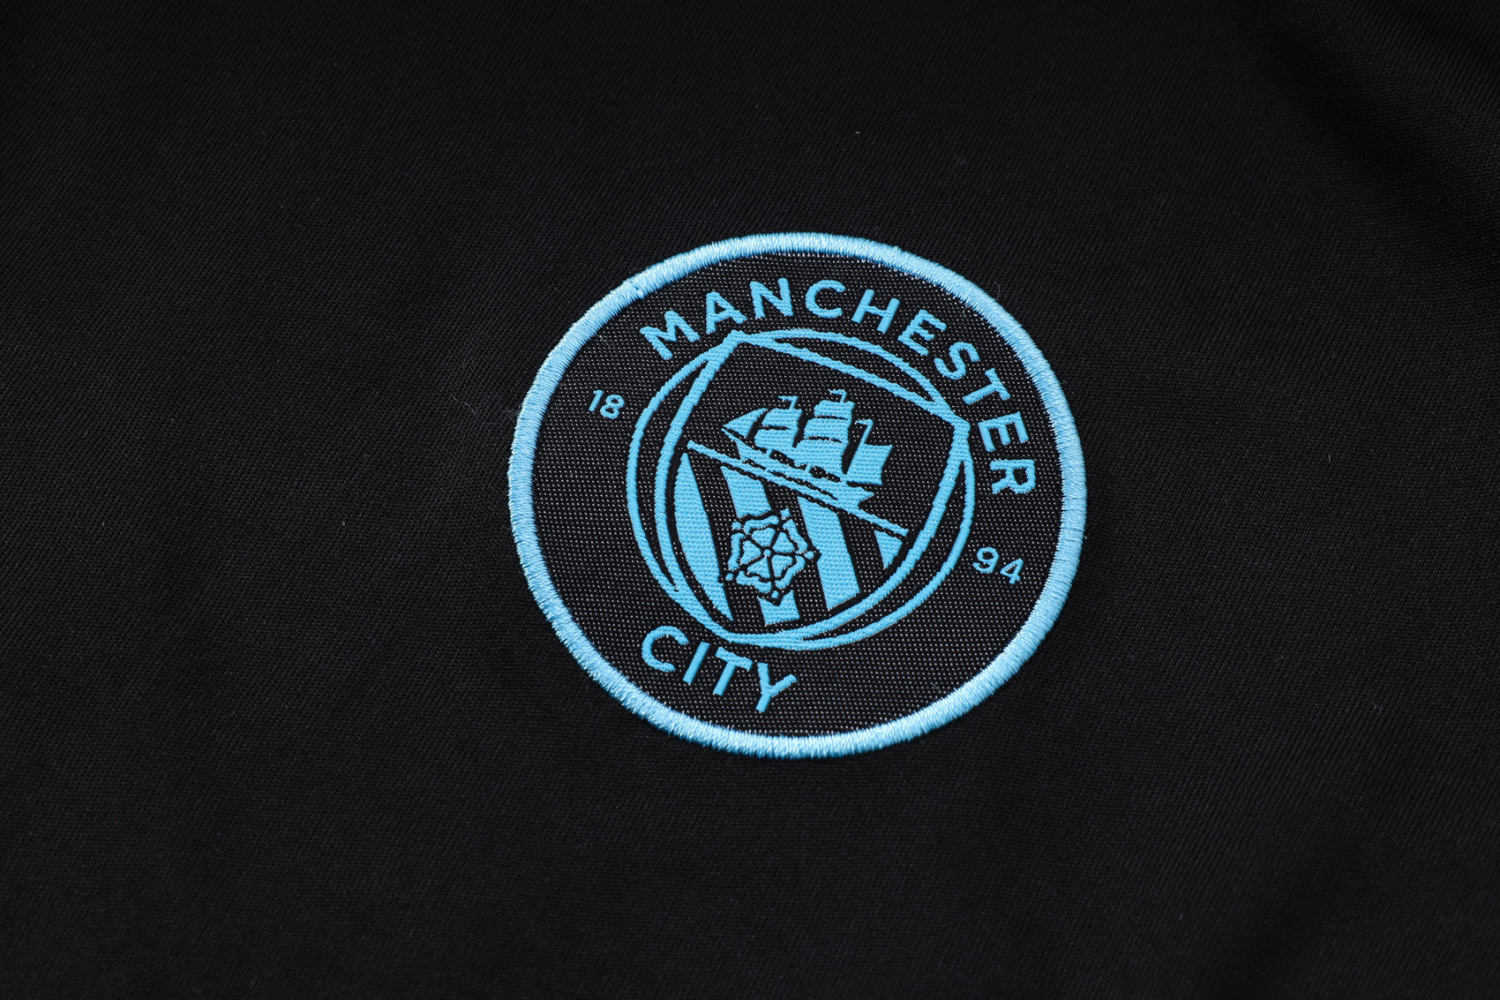 Manchester City Soccer Jersey + Short Replica Black 2022/23 Mens